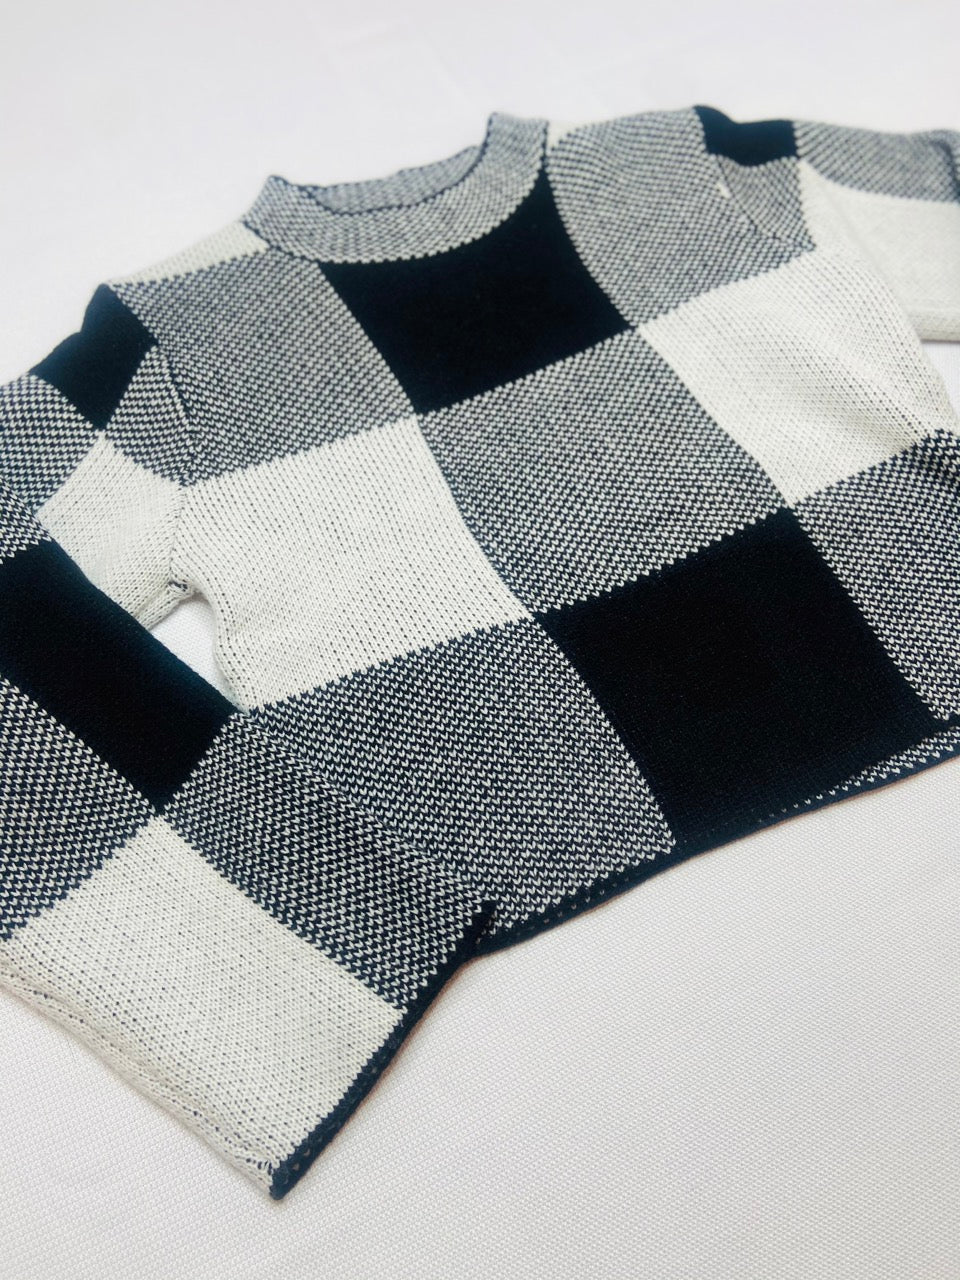 Cropped Black and White Buffalo Plaid Sweater- M